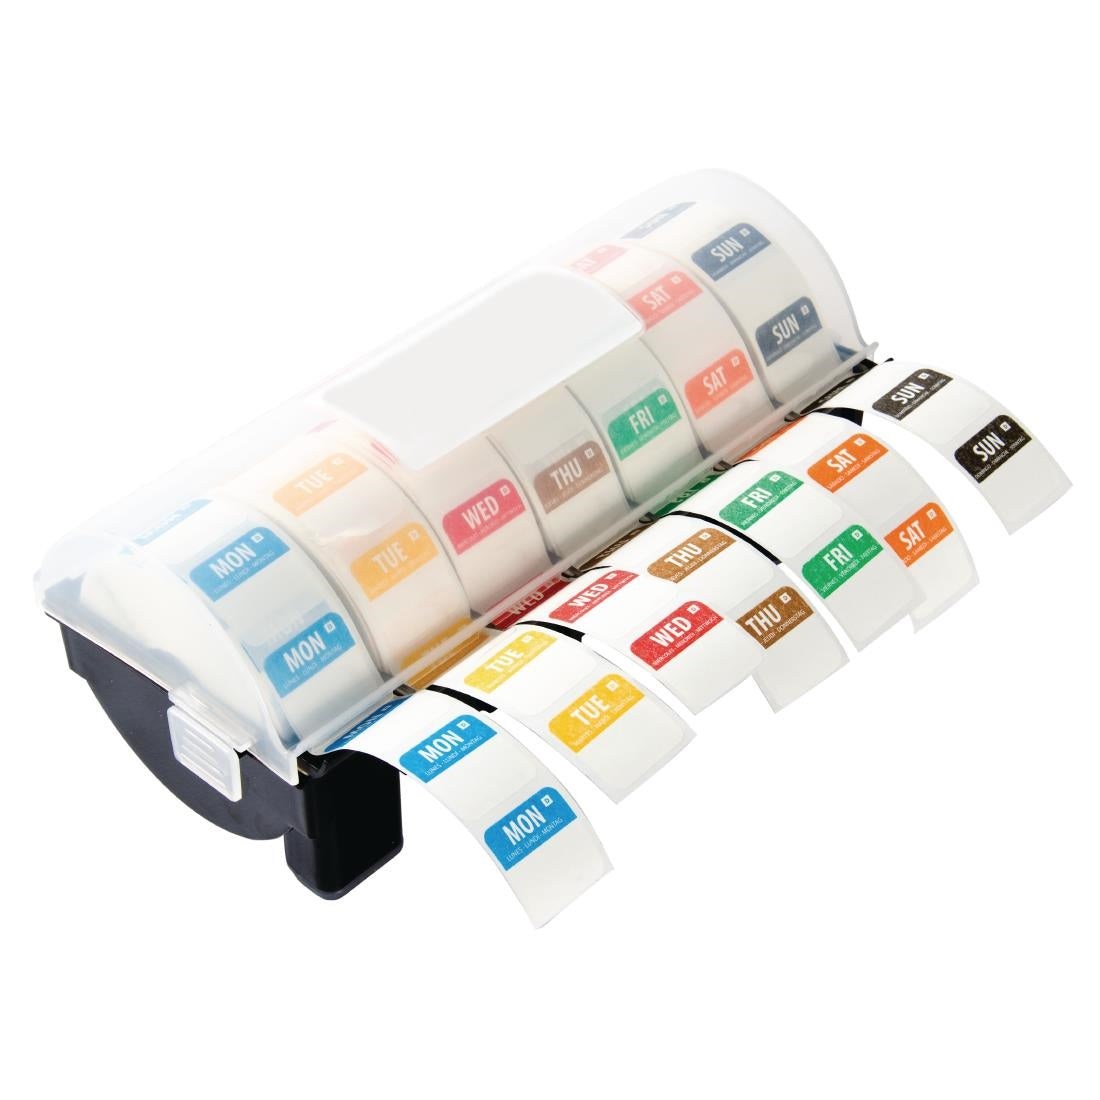 GH474 Dissolvable Colour Coded Food Label Starter kit with 1" Dispenser